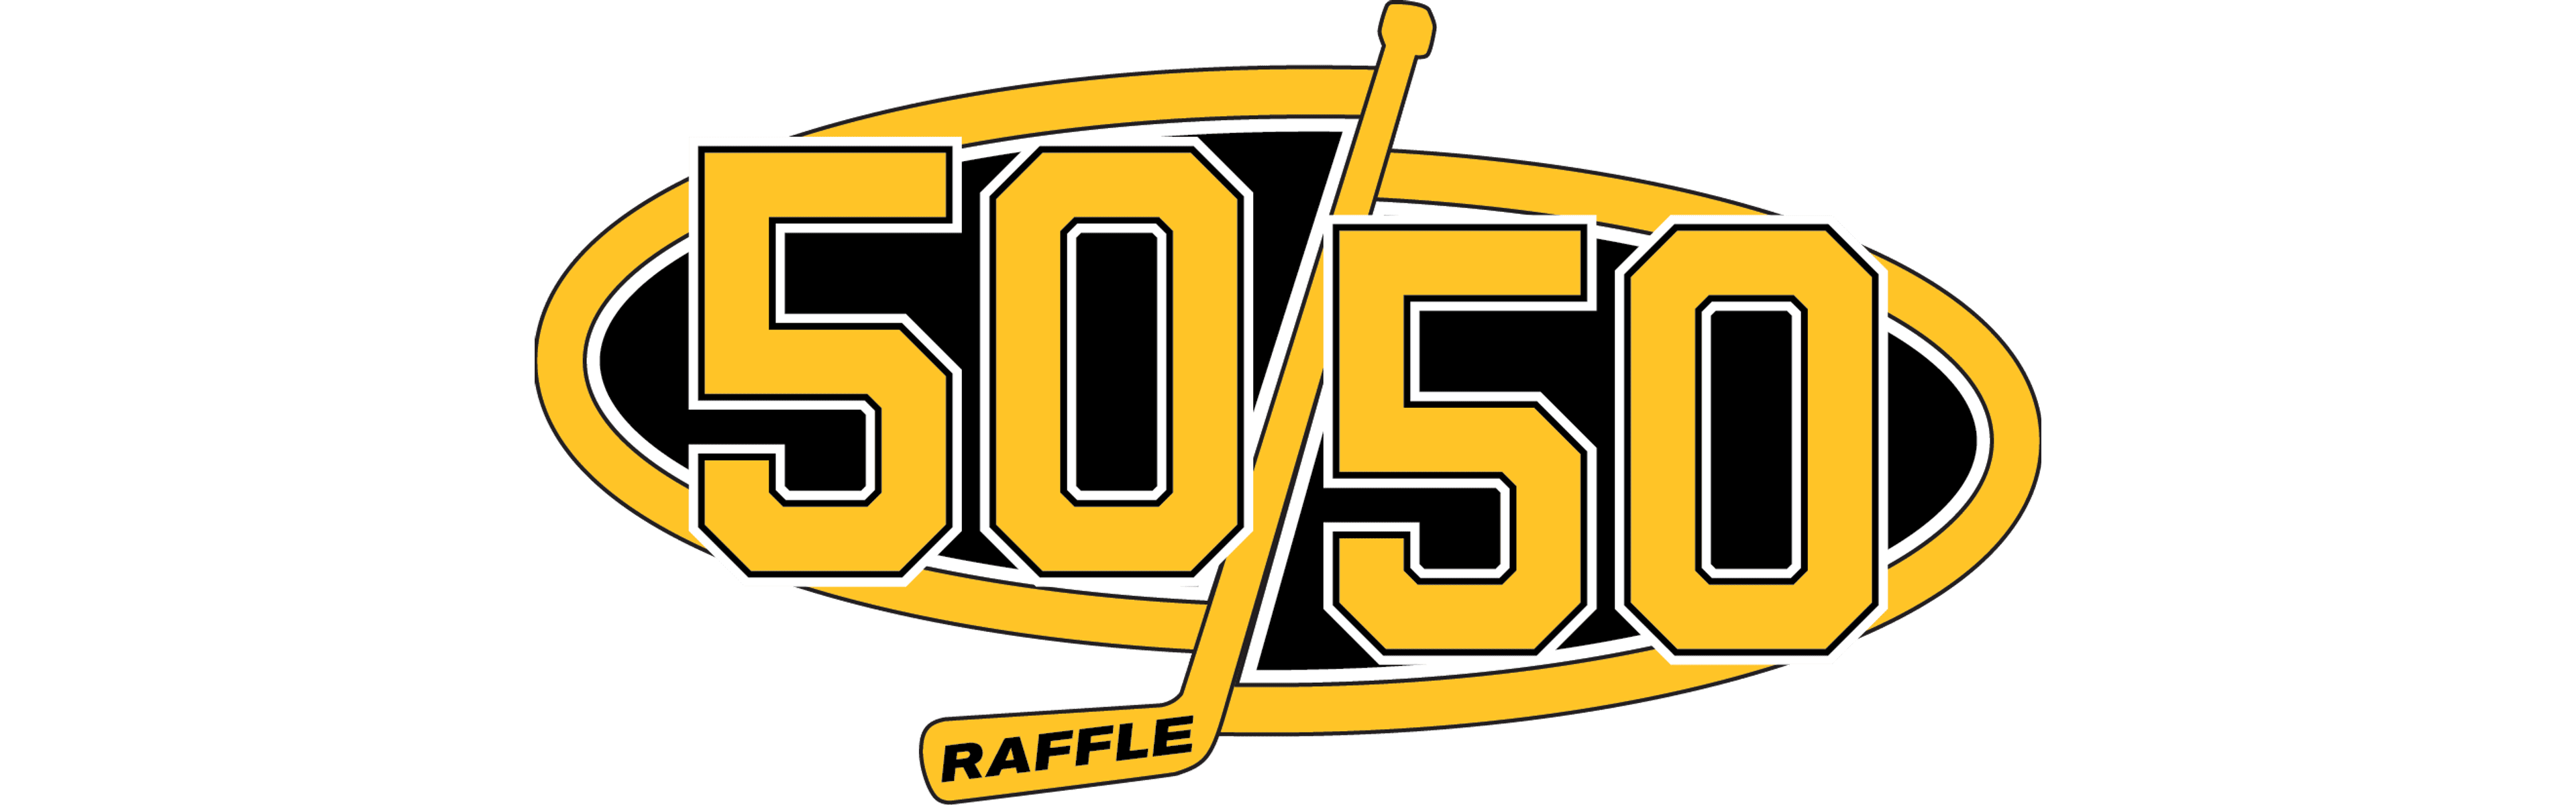 Women in Sports Night 50/50 Raffle- $75,000 Guarantee logo image